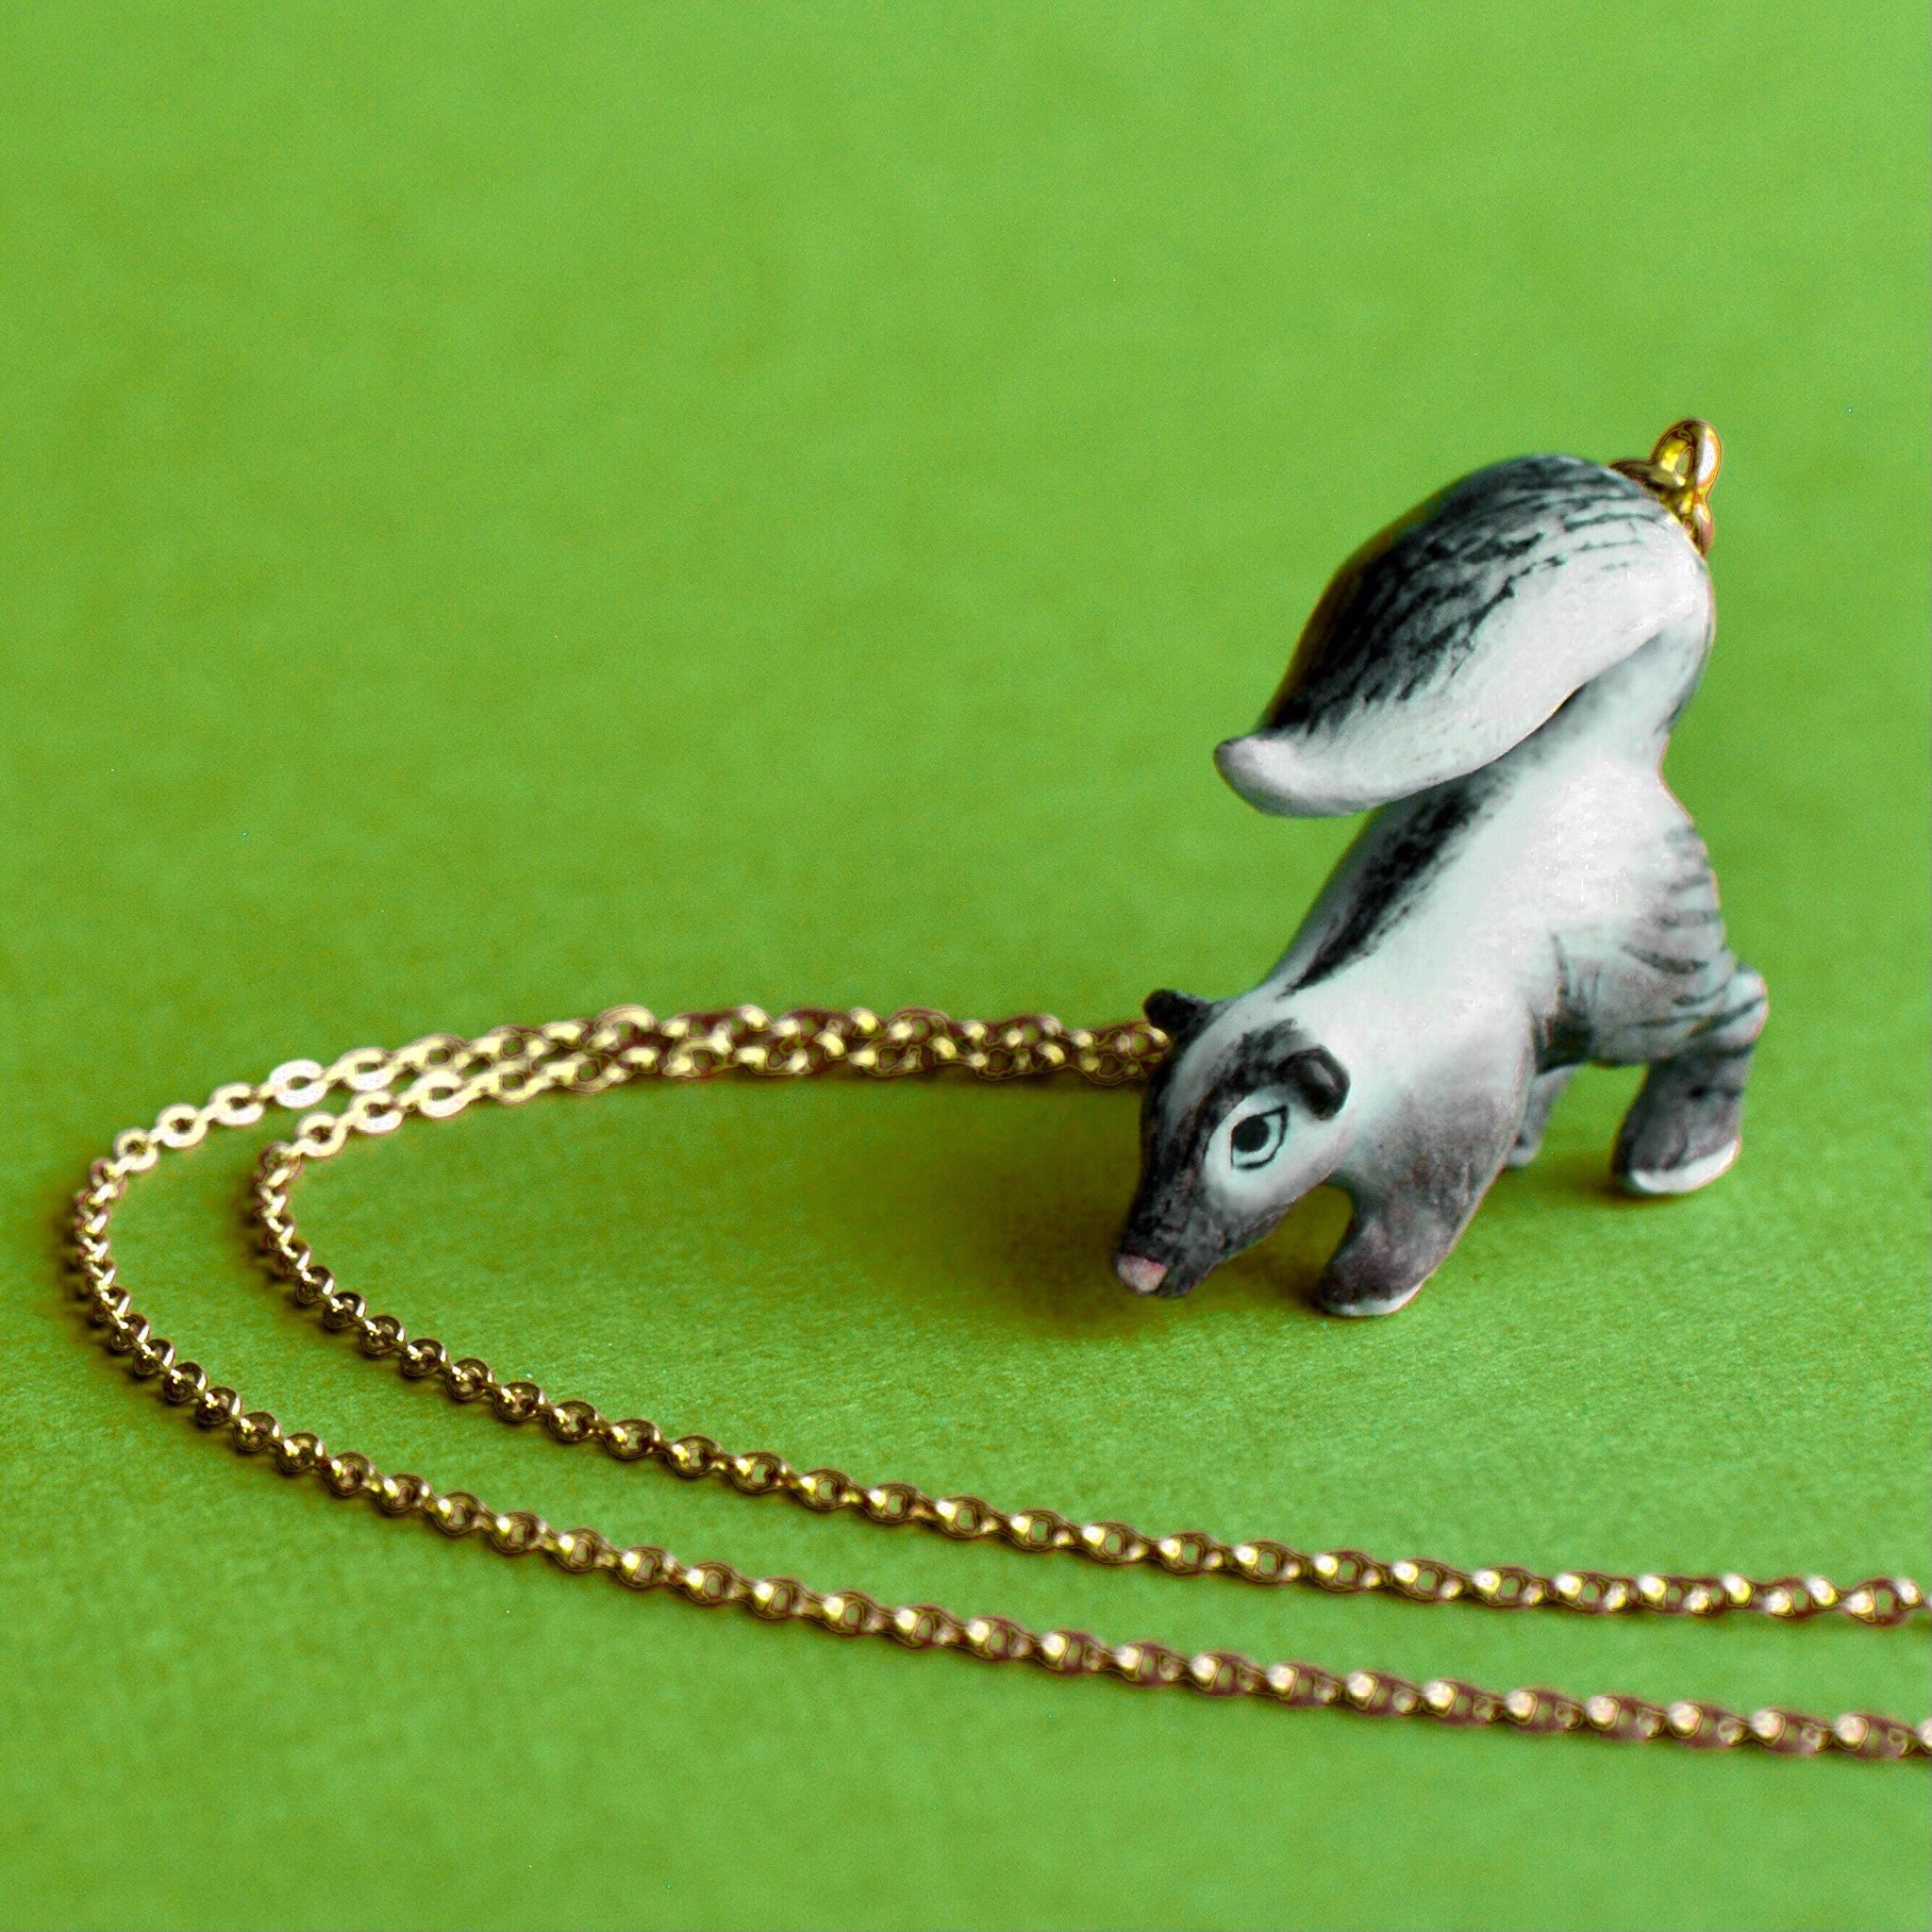 Skunk Necklace | Camp Hollow Ceramic Animal Jewelry